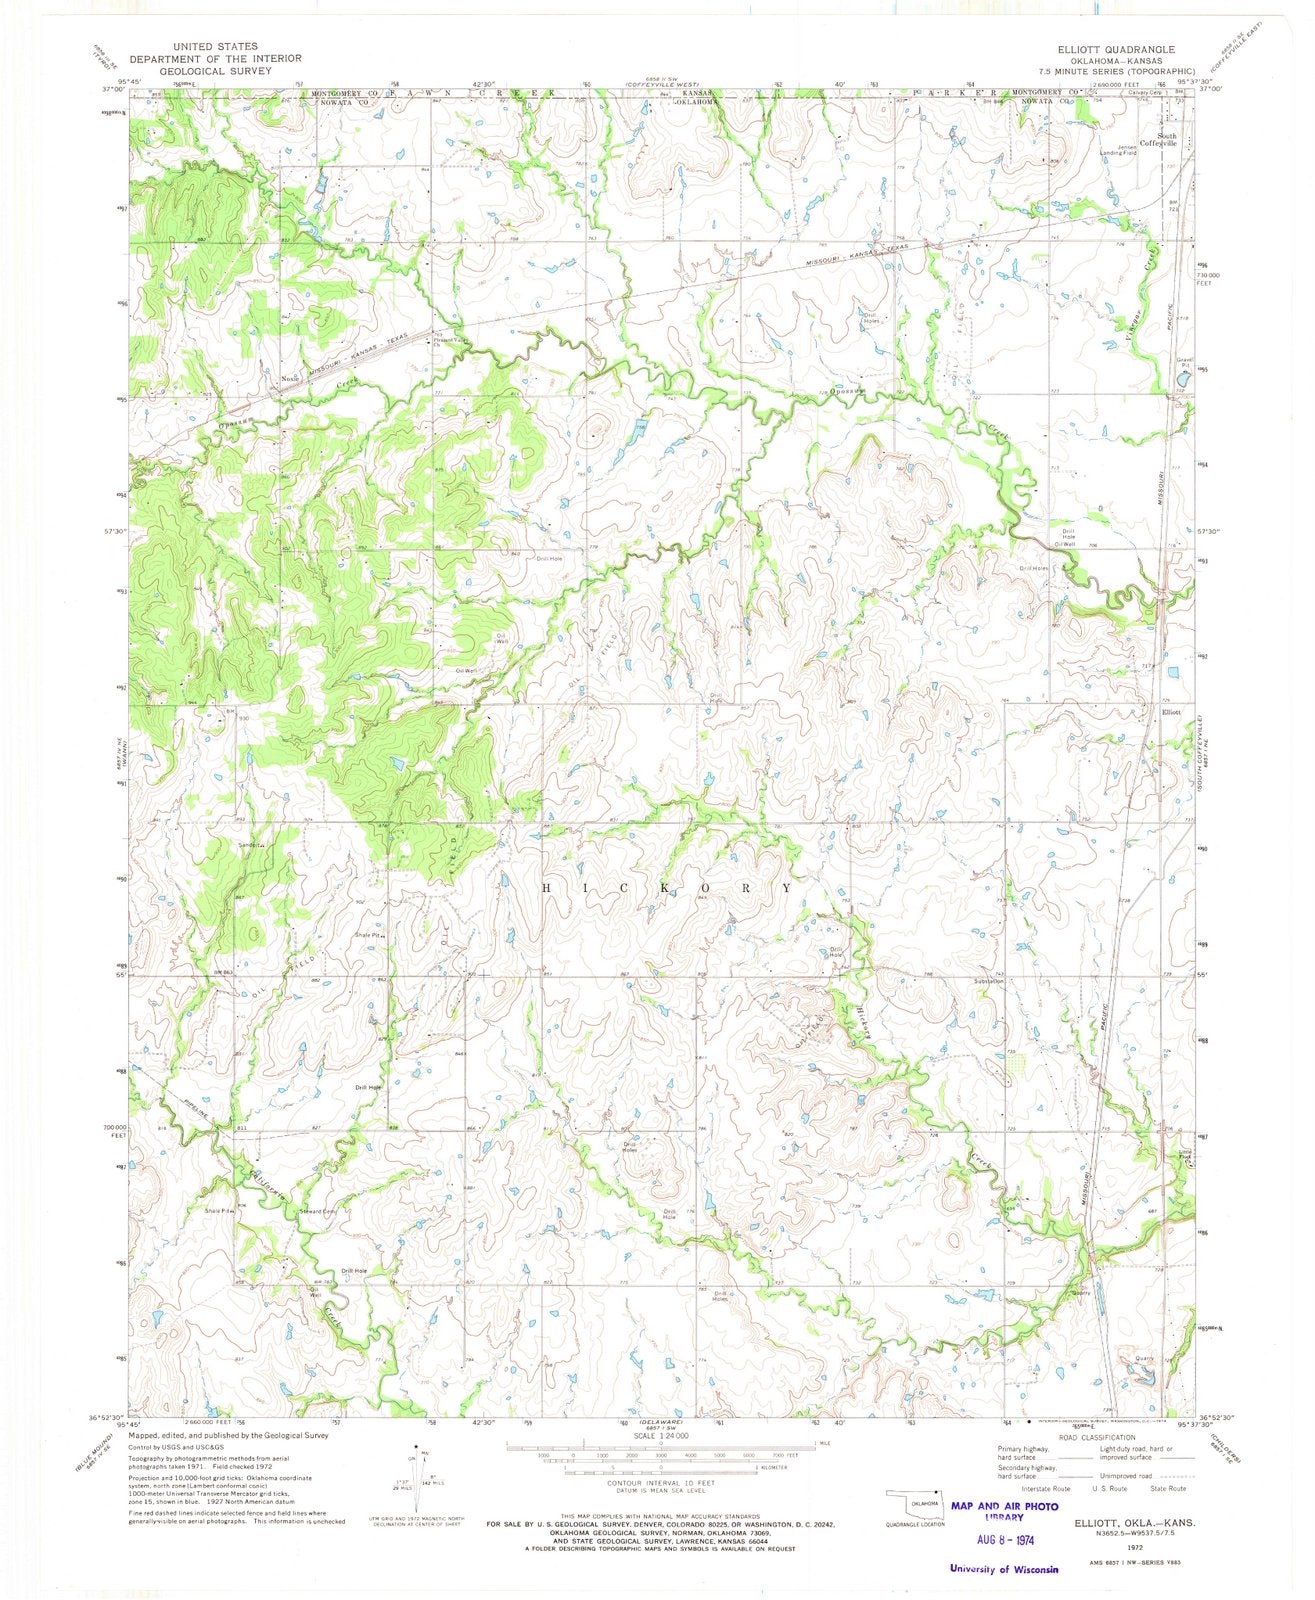 1972 Elliott, OK - Oklahoma - USGS Topographic Map